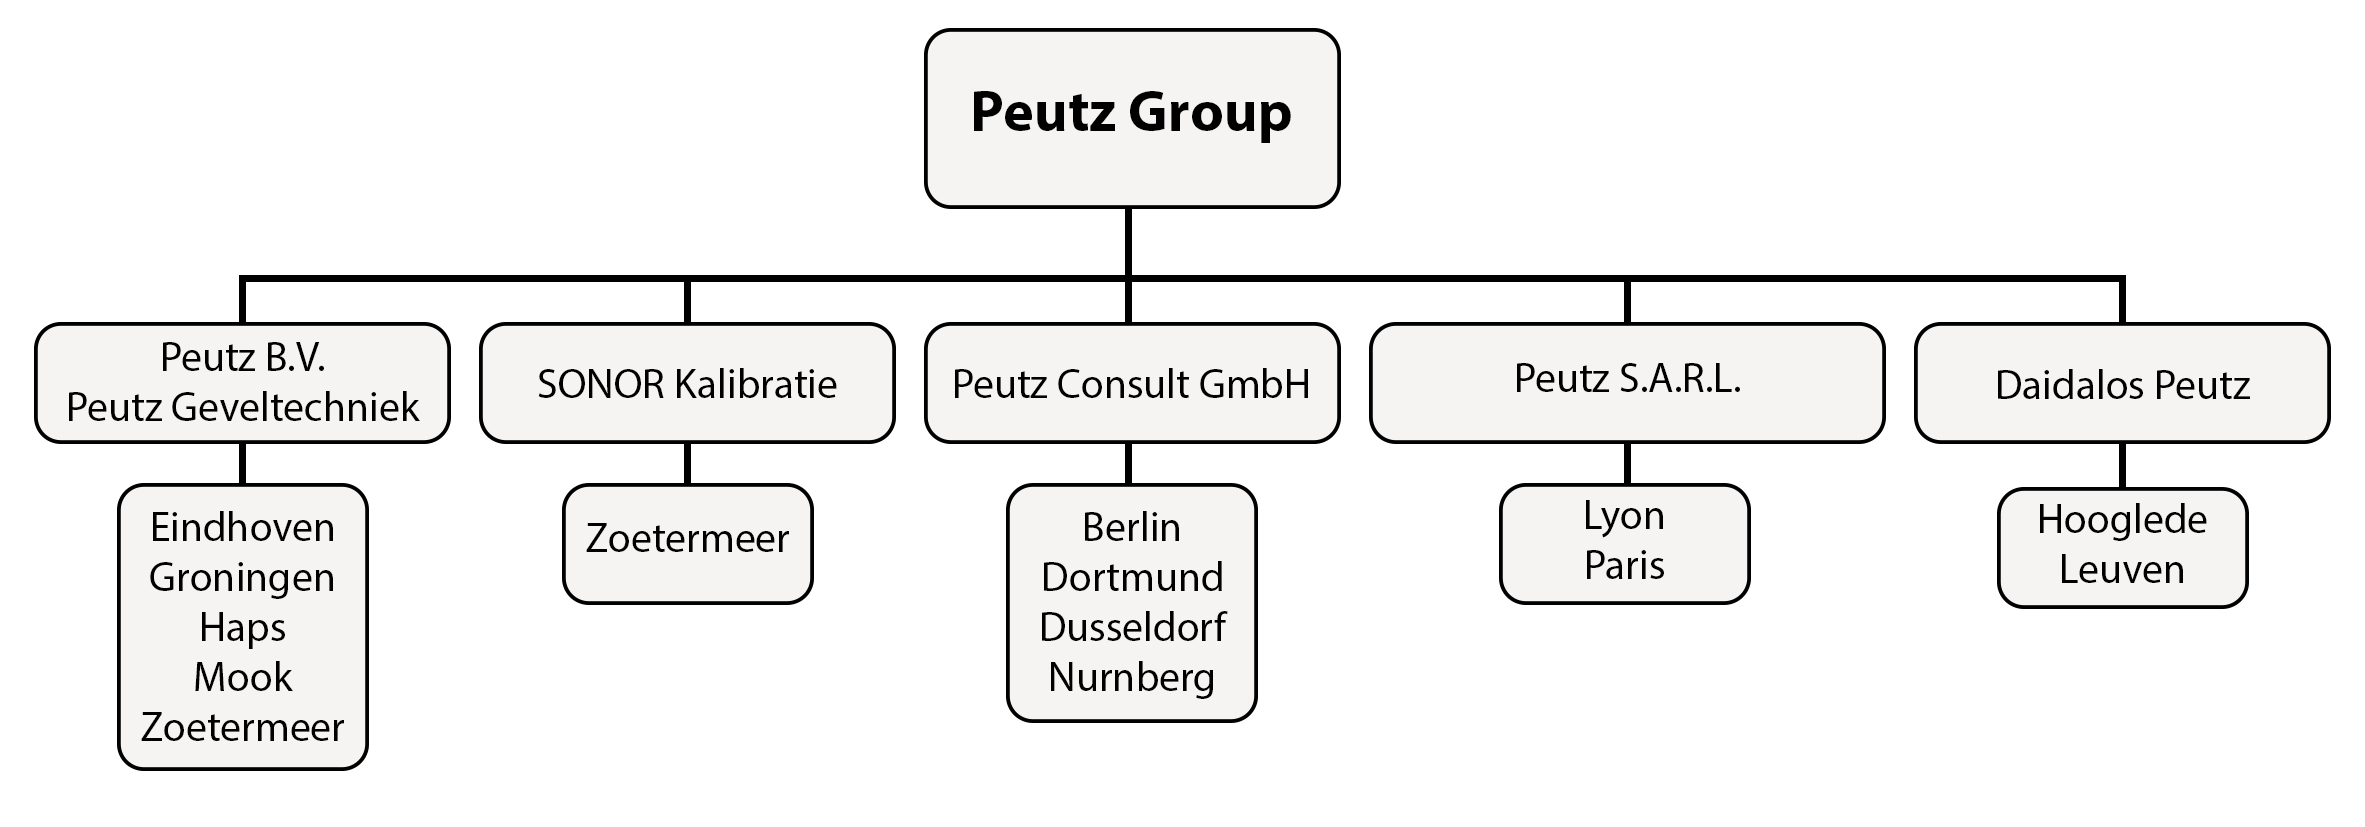 Peutz Group